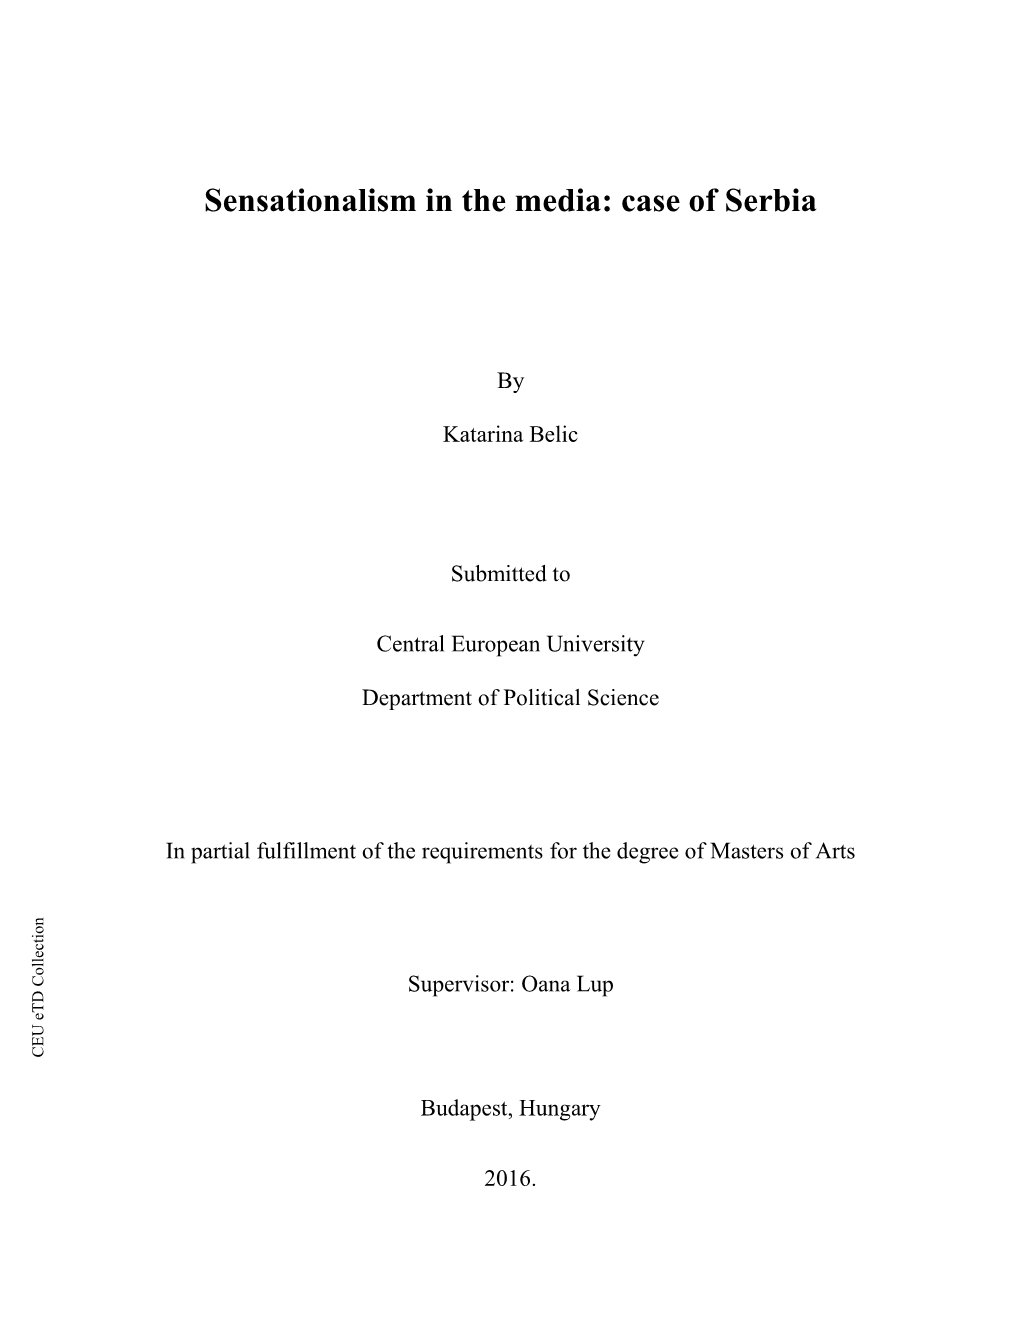 Sensationalism in the Media: Case of Serbia